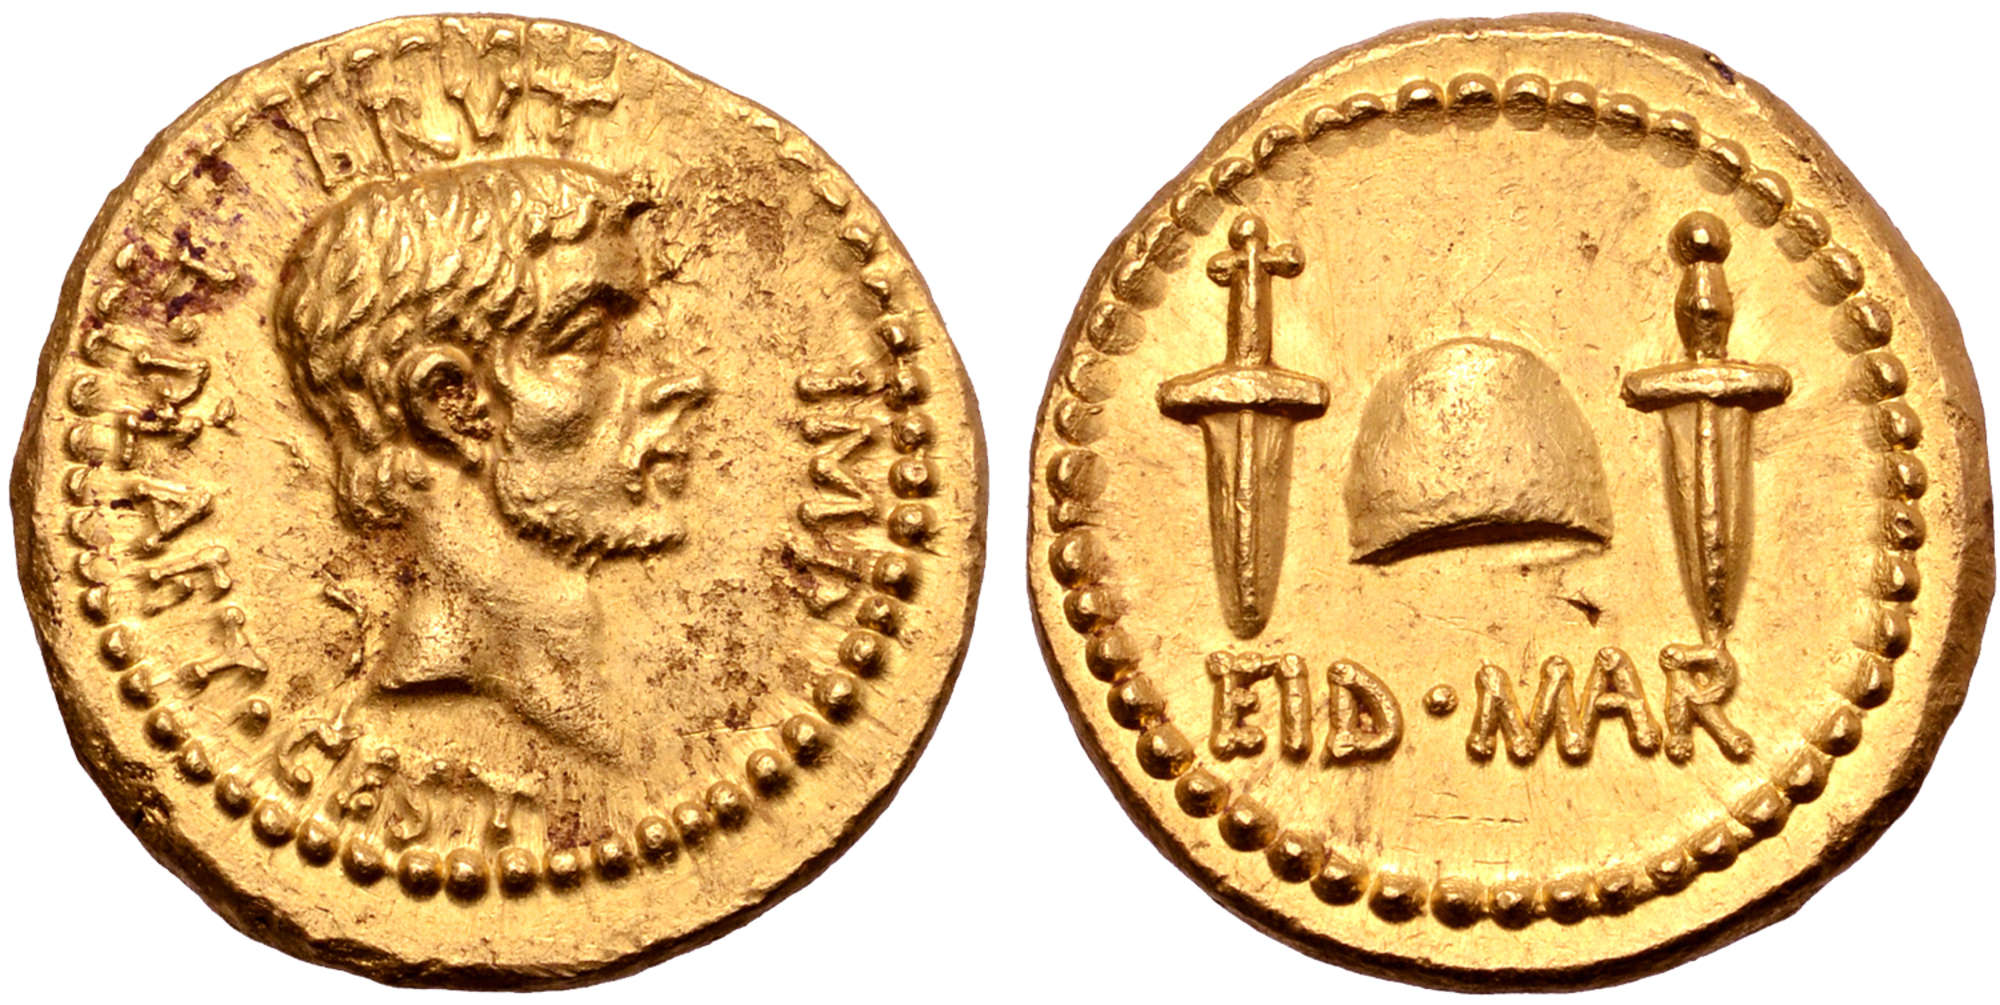 Eid Mar coin minted by Marcus Junius Brutus